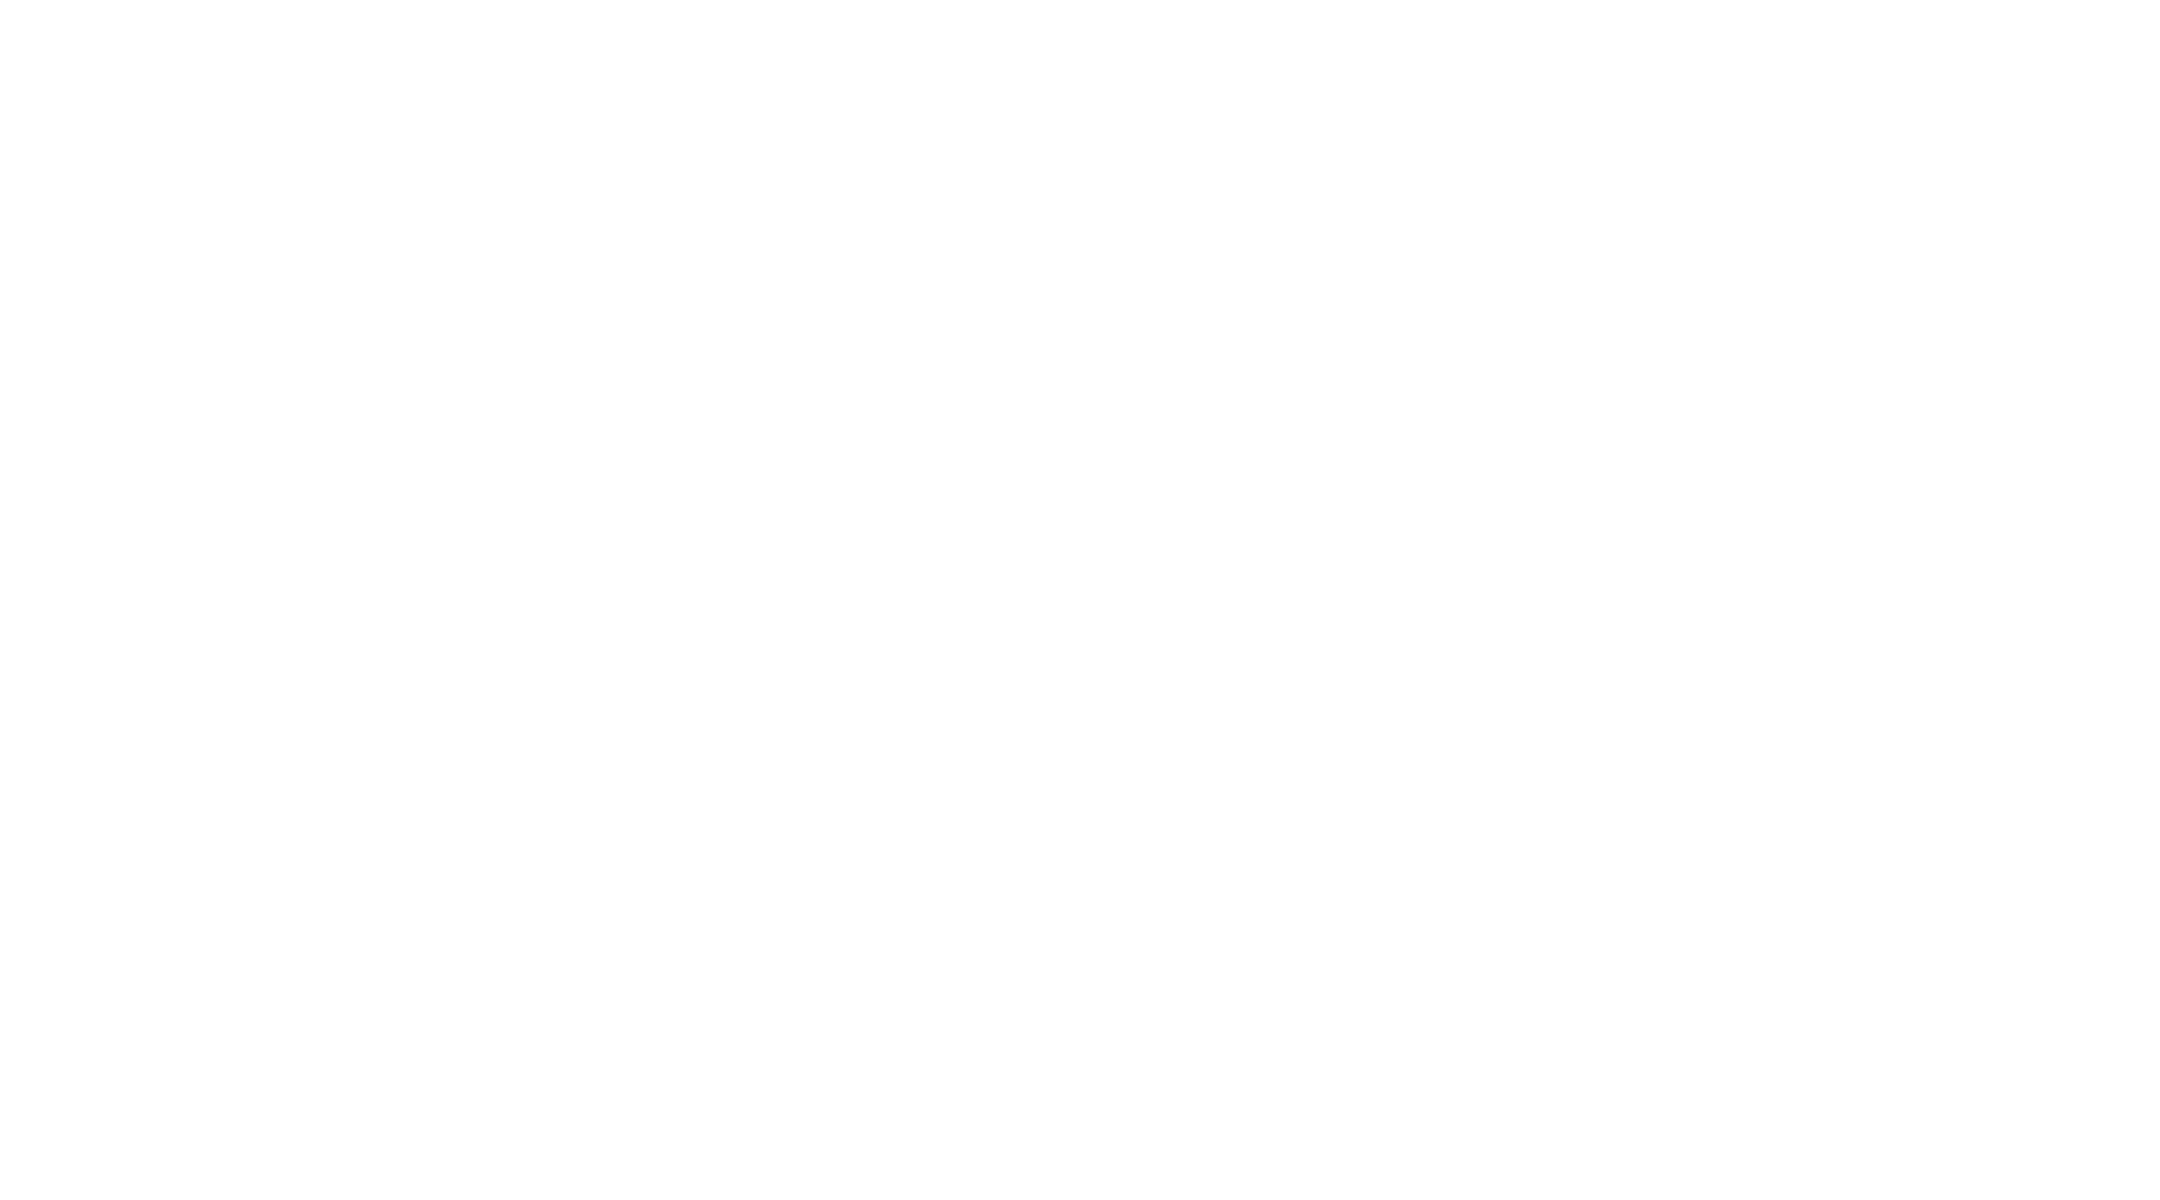 Flo 徽标